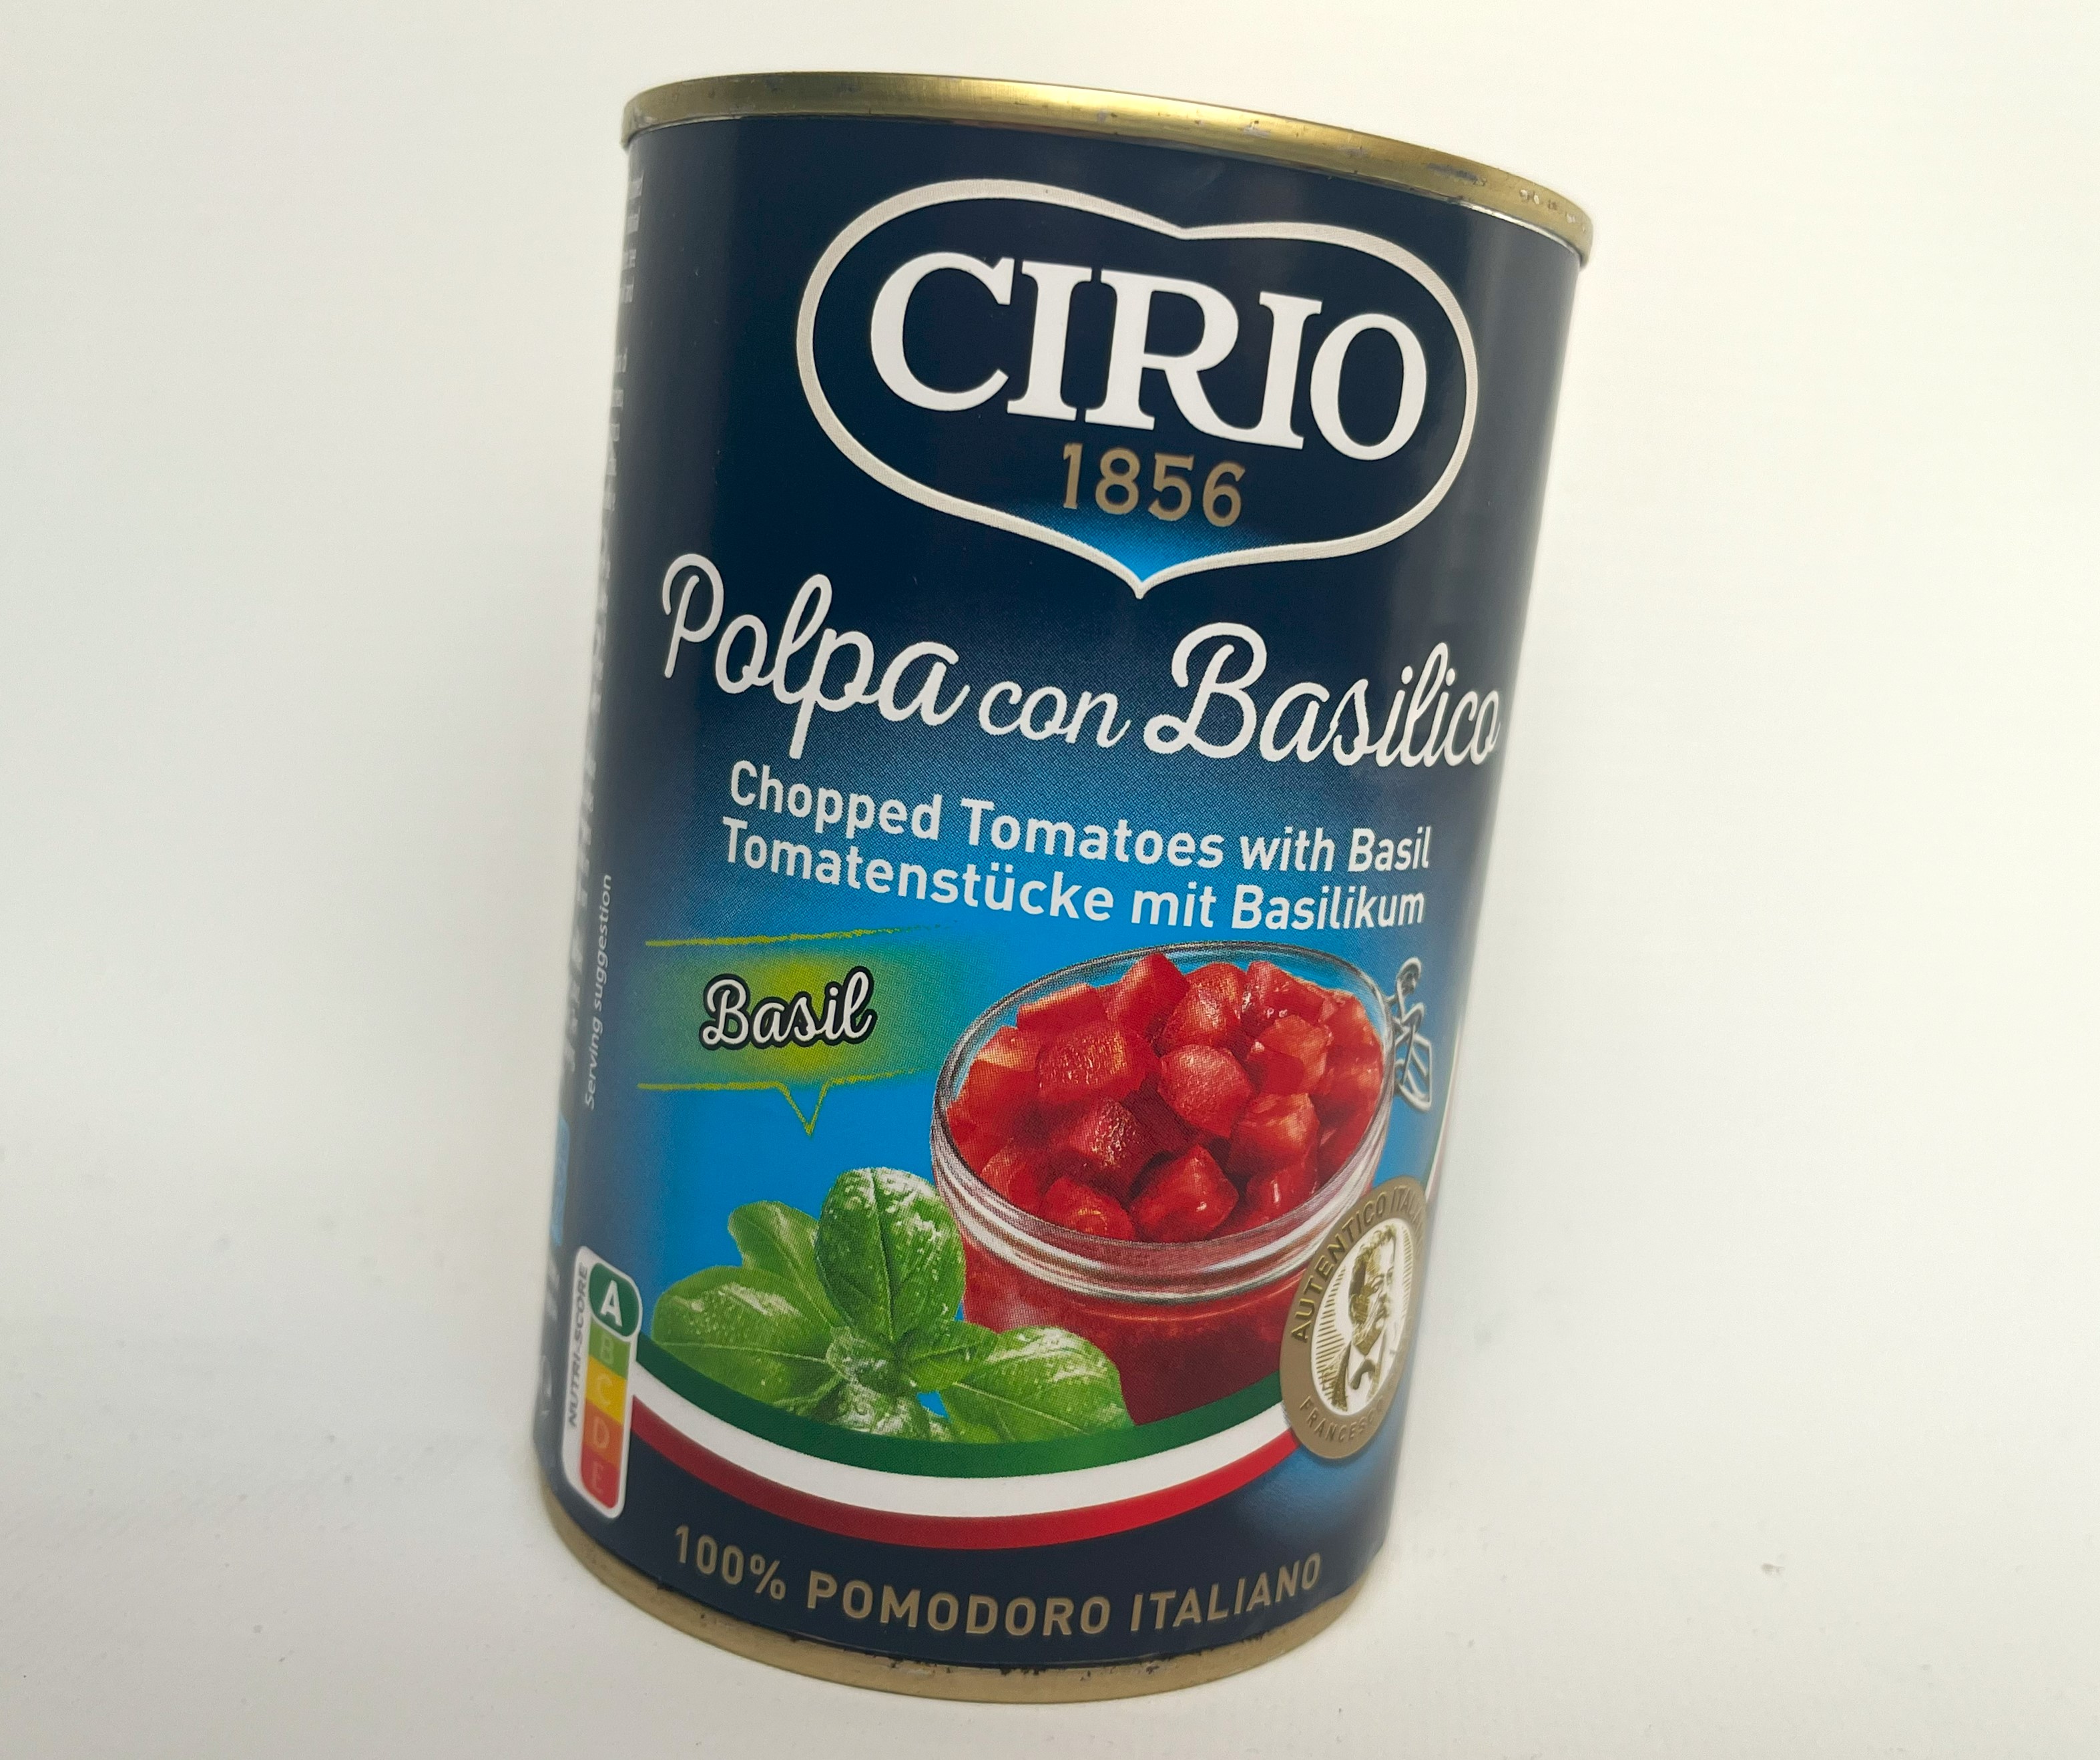 Polpa con Basilico | Francesco Cirio | 400g Nettogewicht | Tomatenstücke mit Basilikum